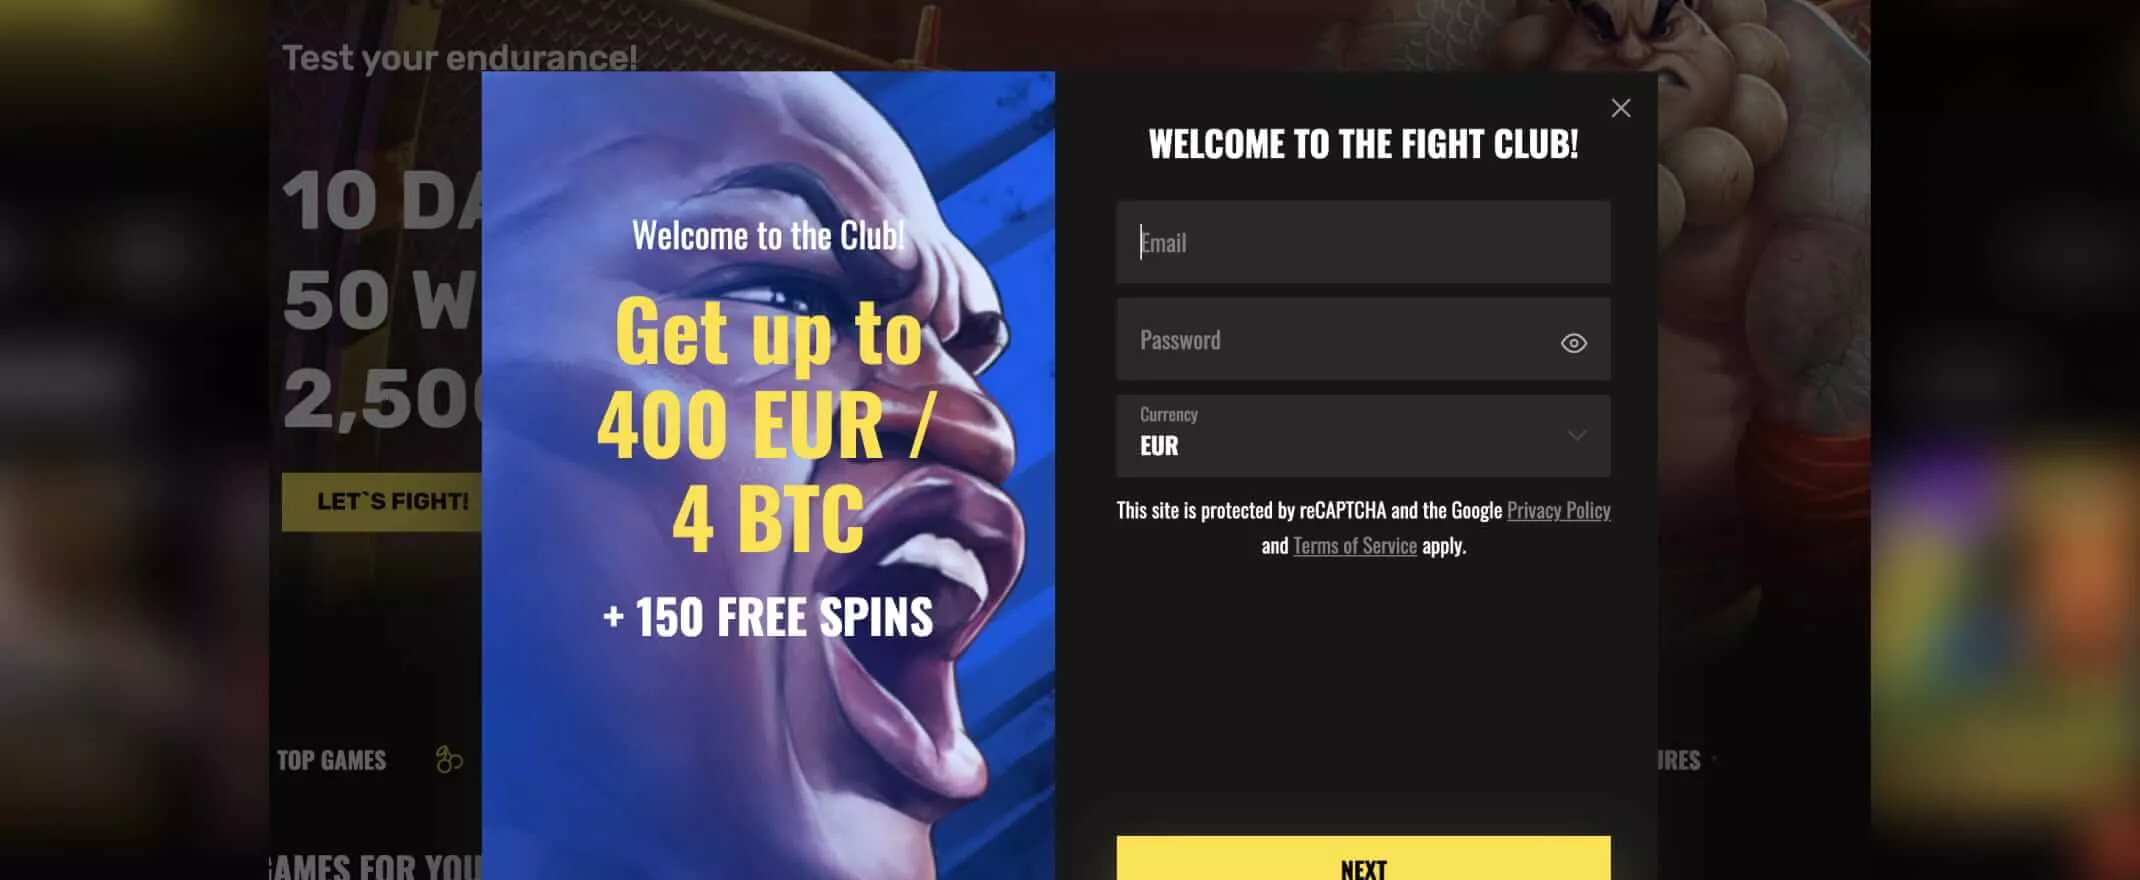 Fight Club Casino screenshot of the registration